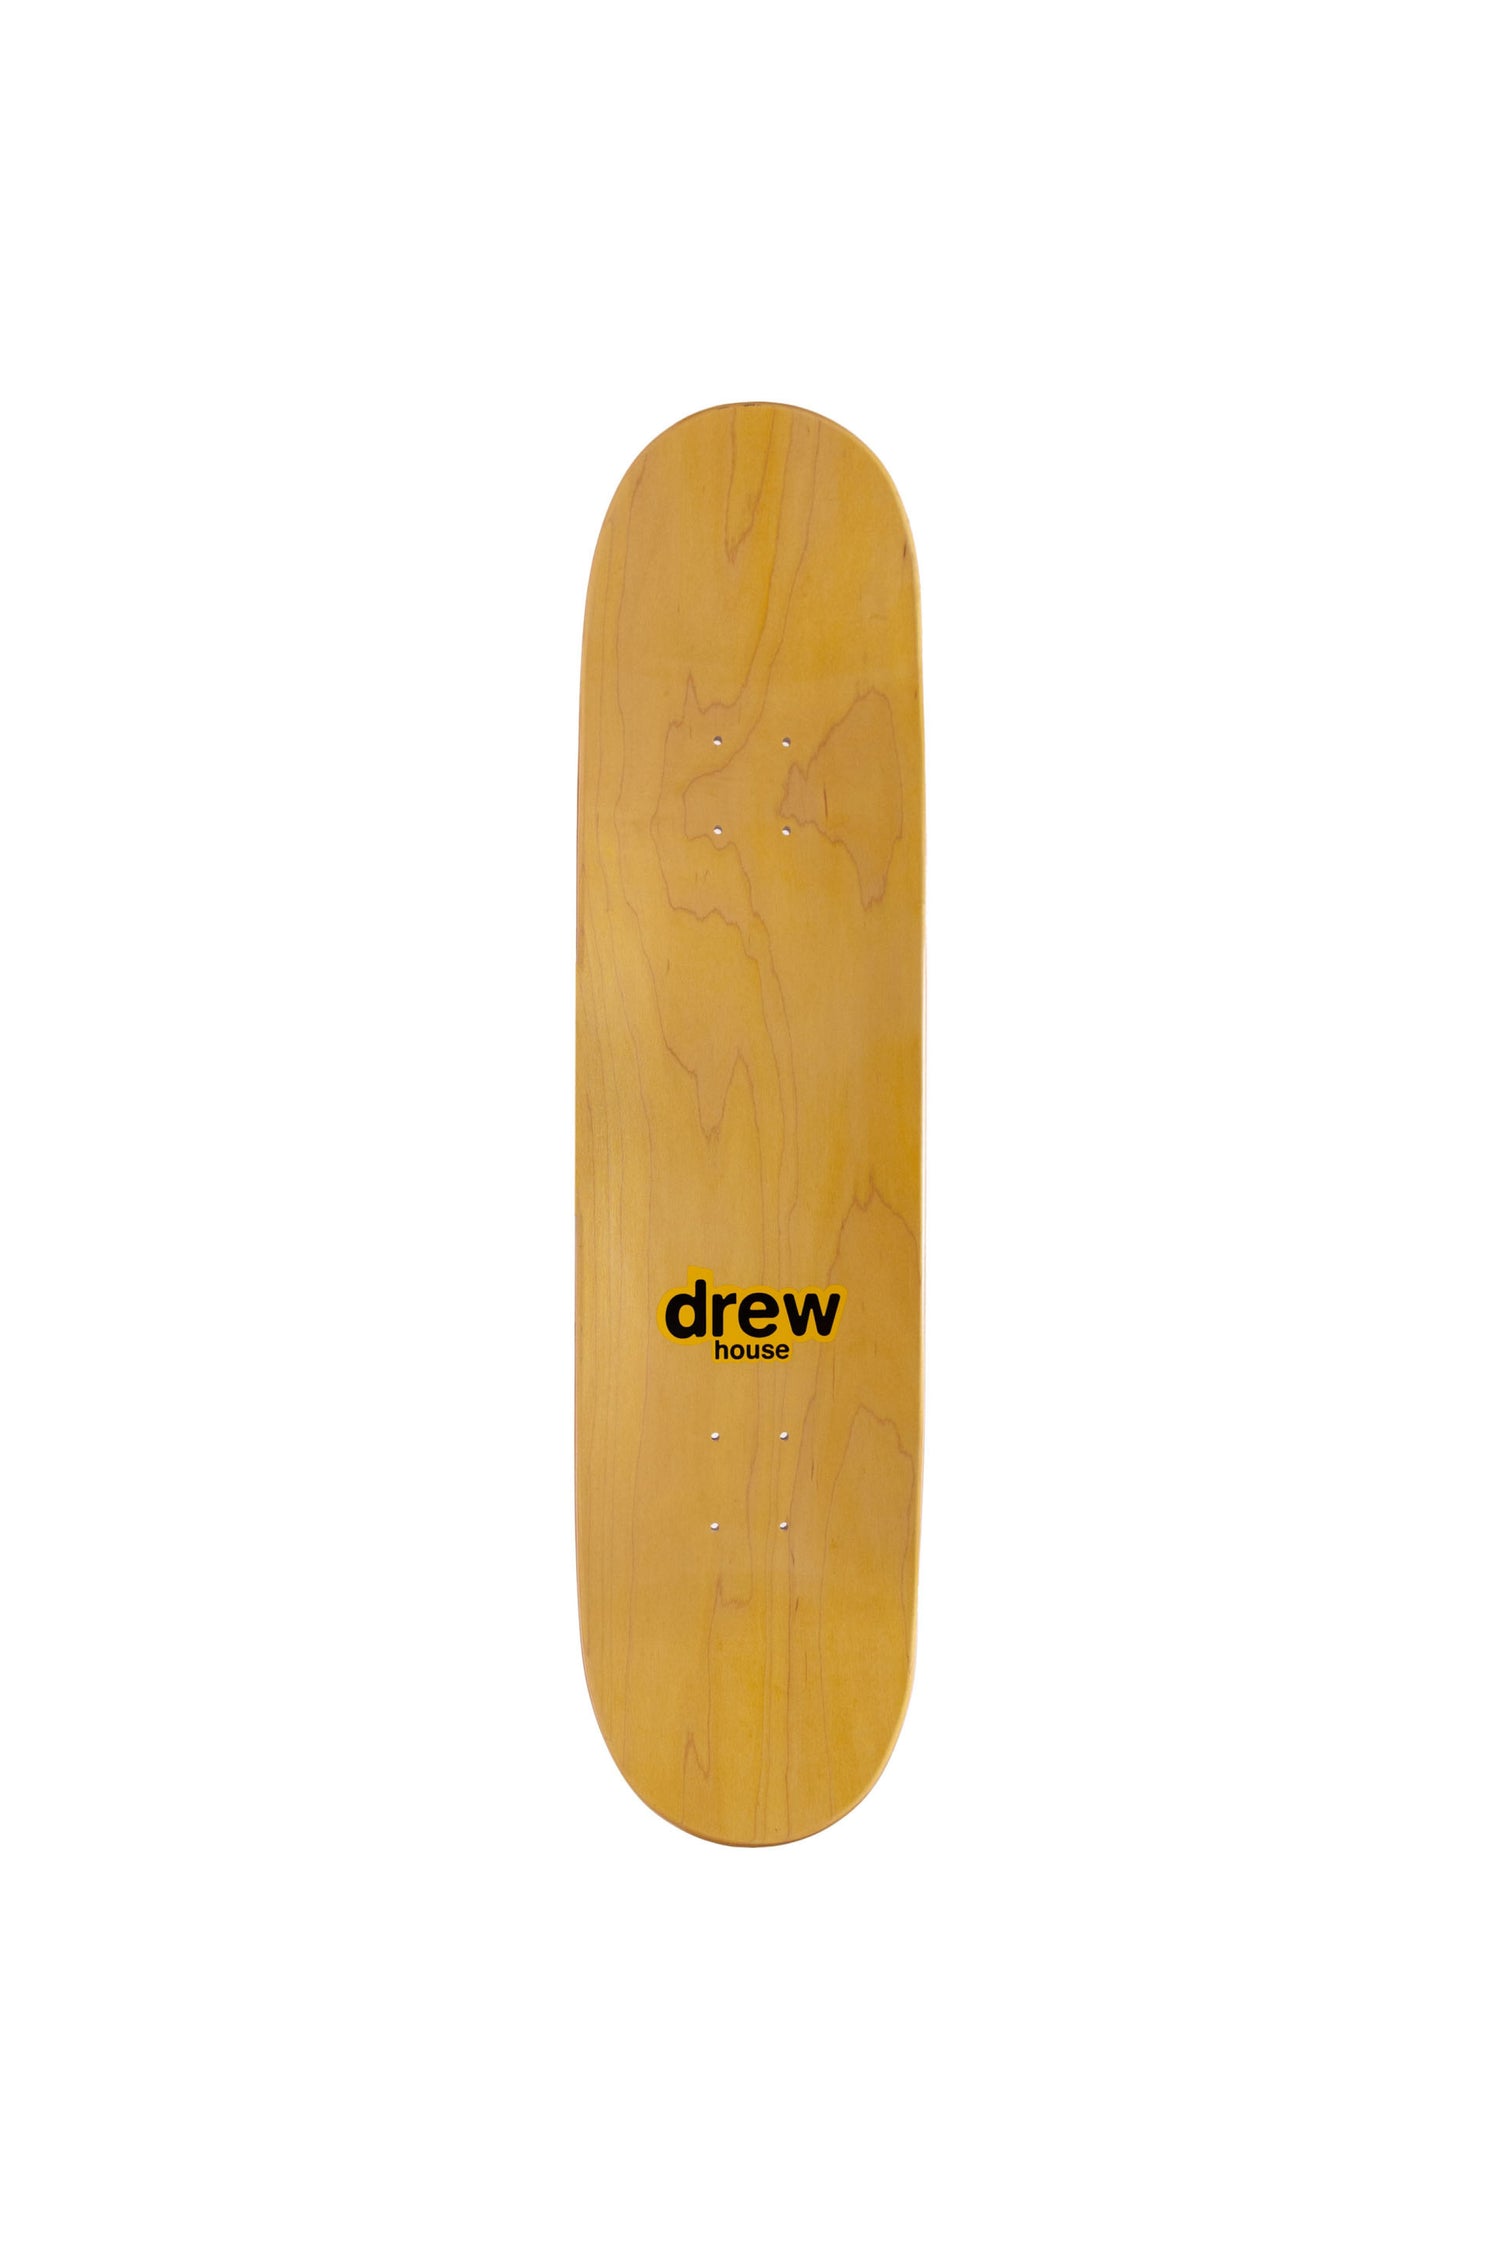 drew house 8inches skateboard deck